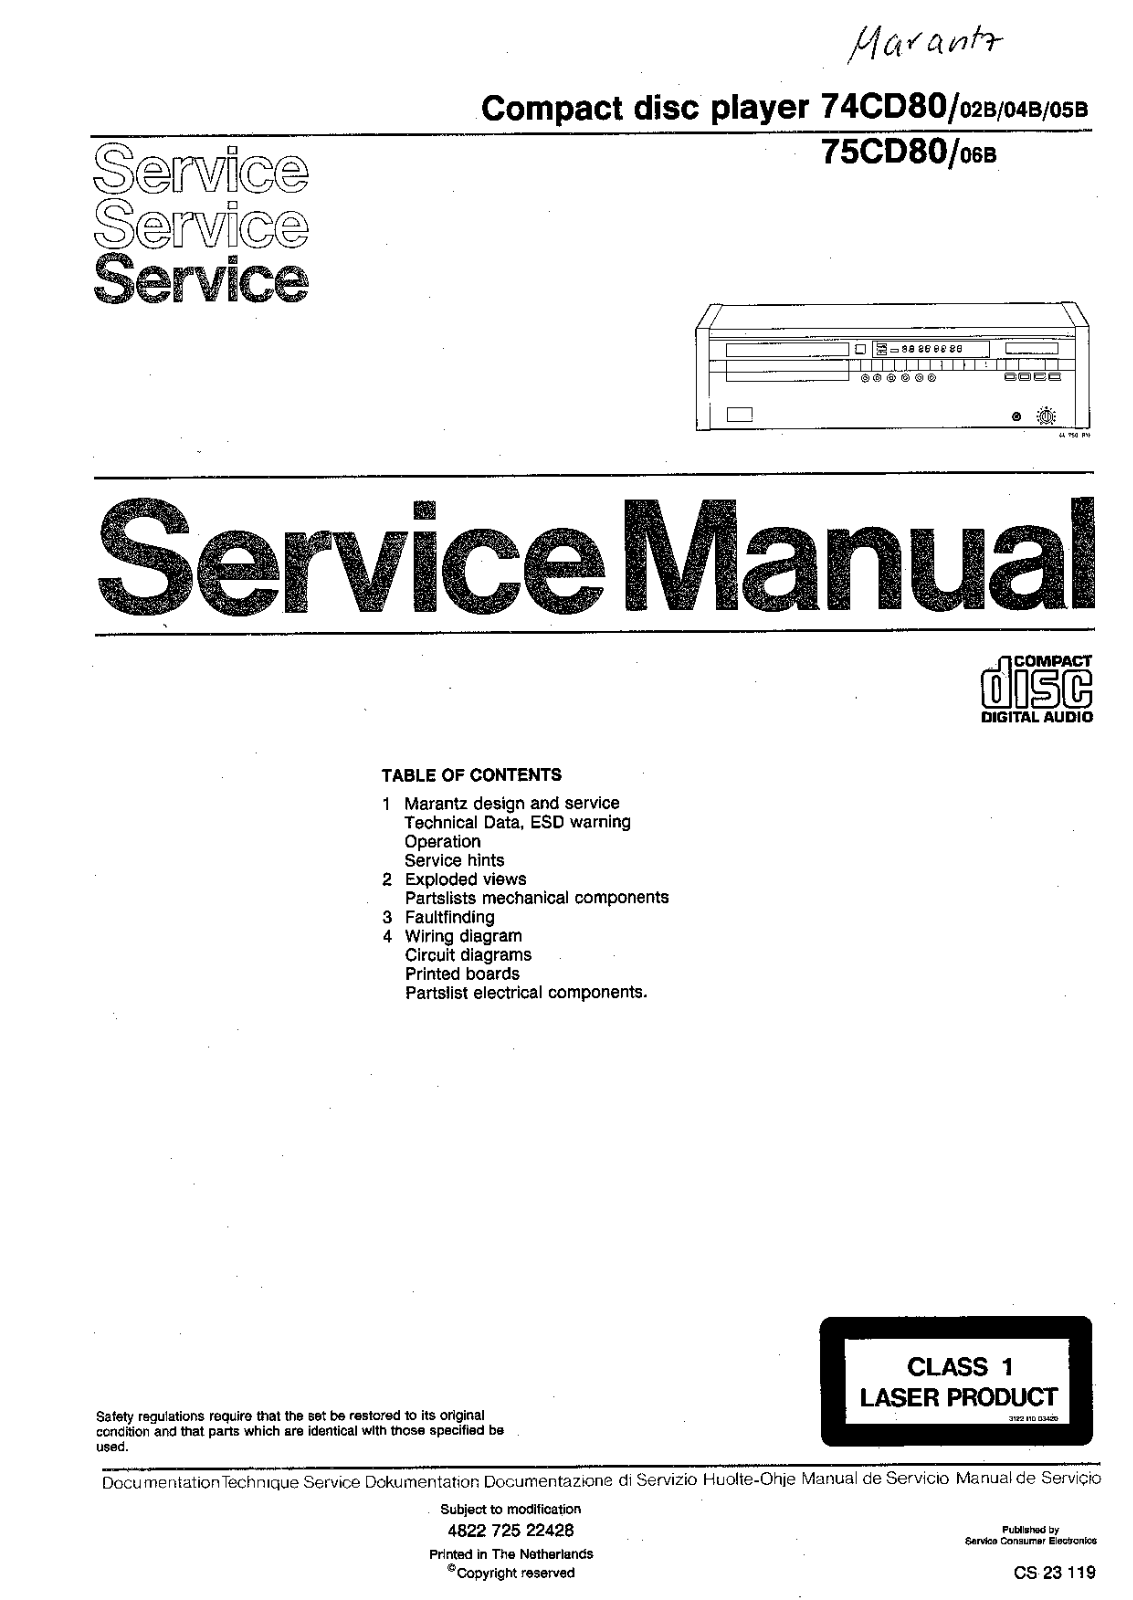 Marantz CD-80 Service Manual